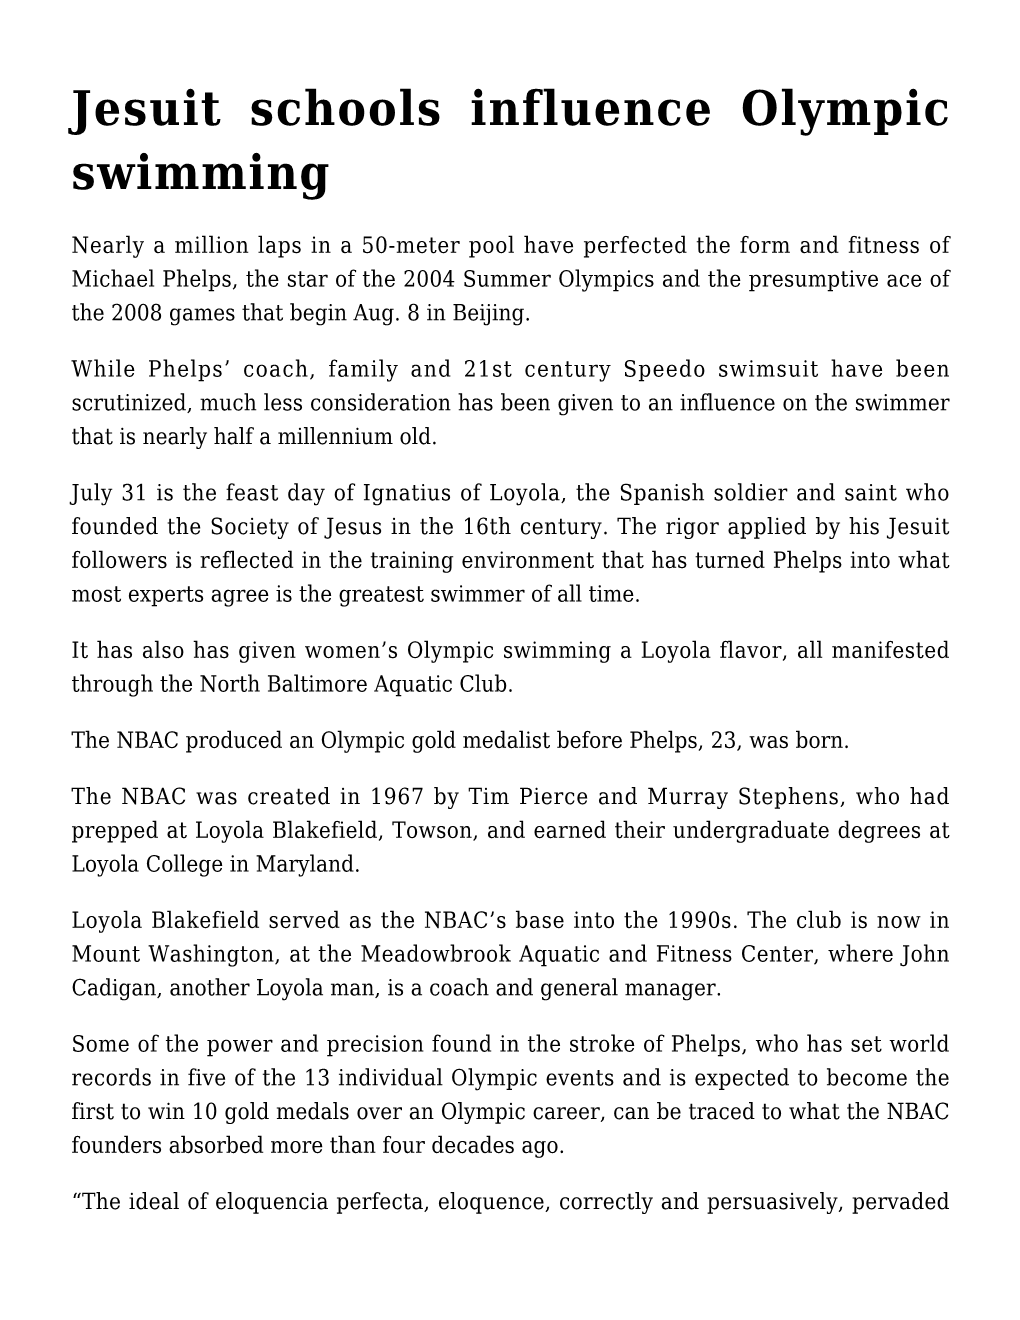 Jesuit Schools Influence Olympic Swimming